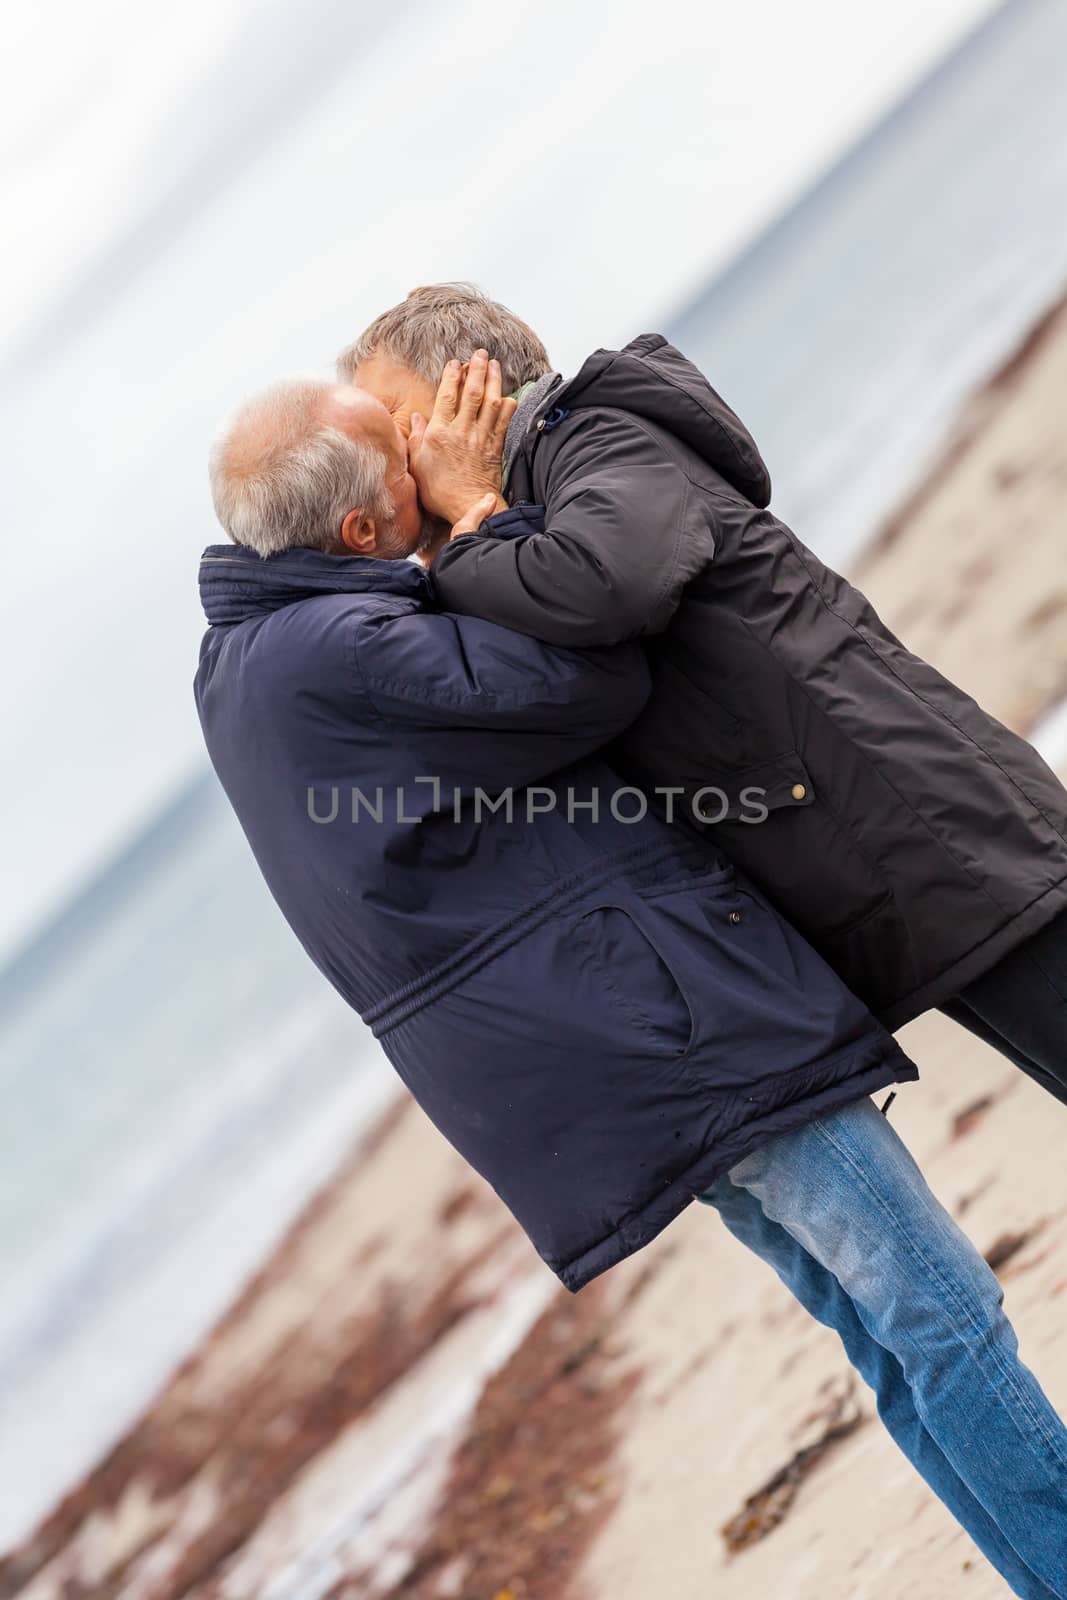 happy elderly senior couple walking on beach by juniart